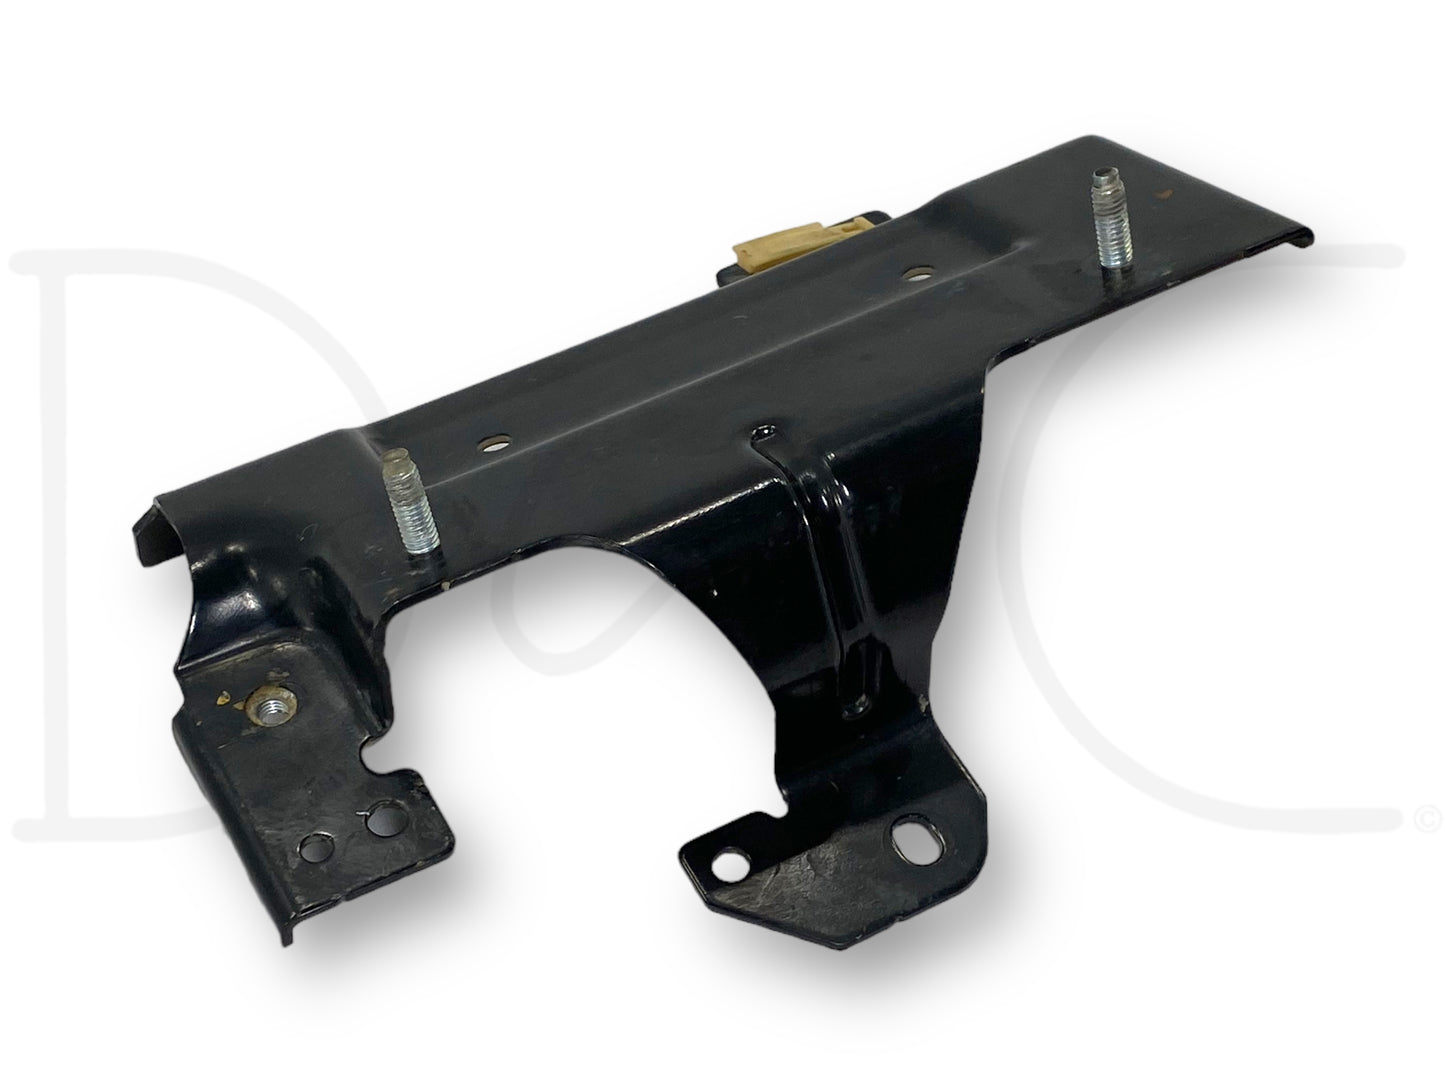 08-10 Ford F250 6.4 6.4L Diesel Gpr Glow Plug Relay Controller Mount Bracket